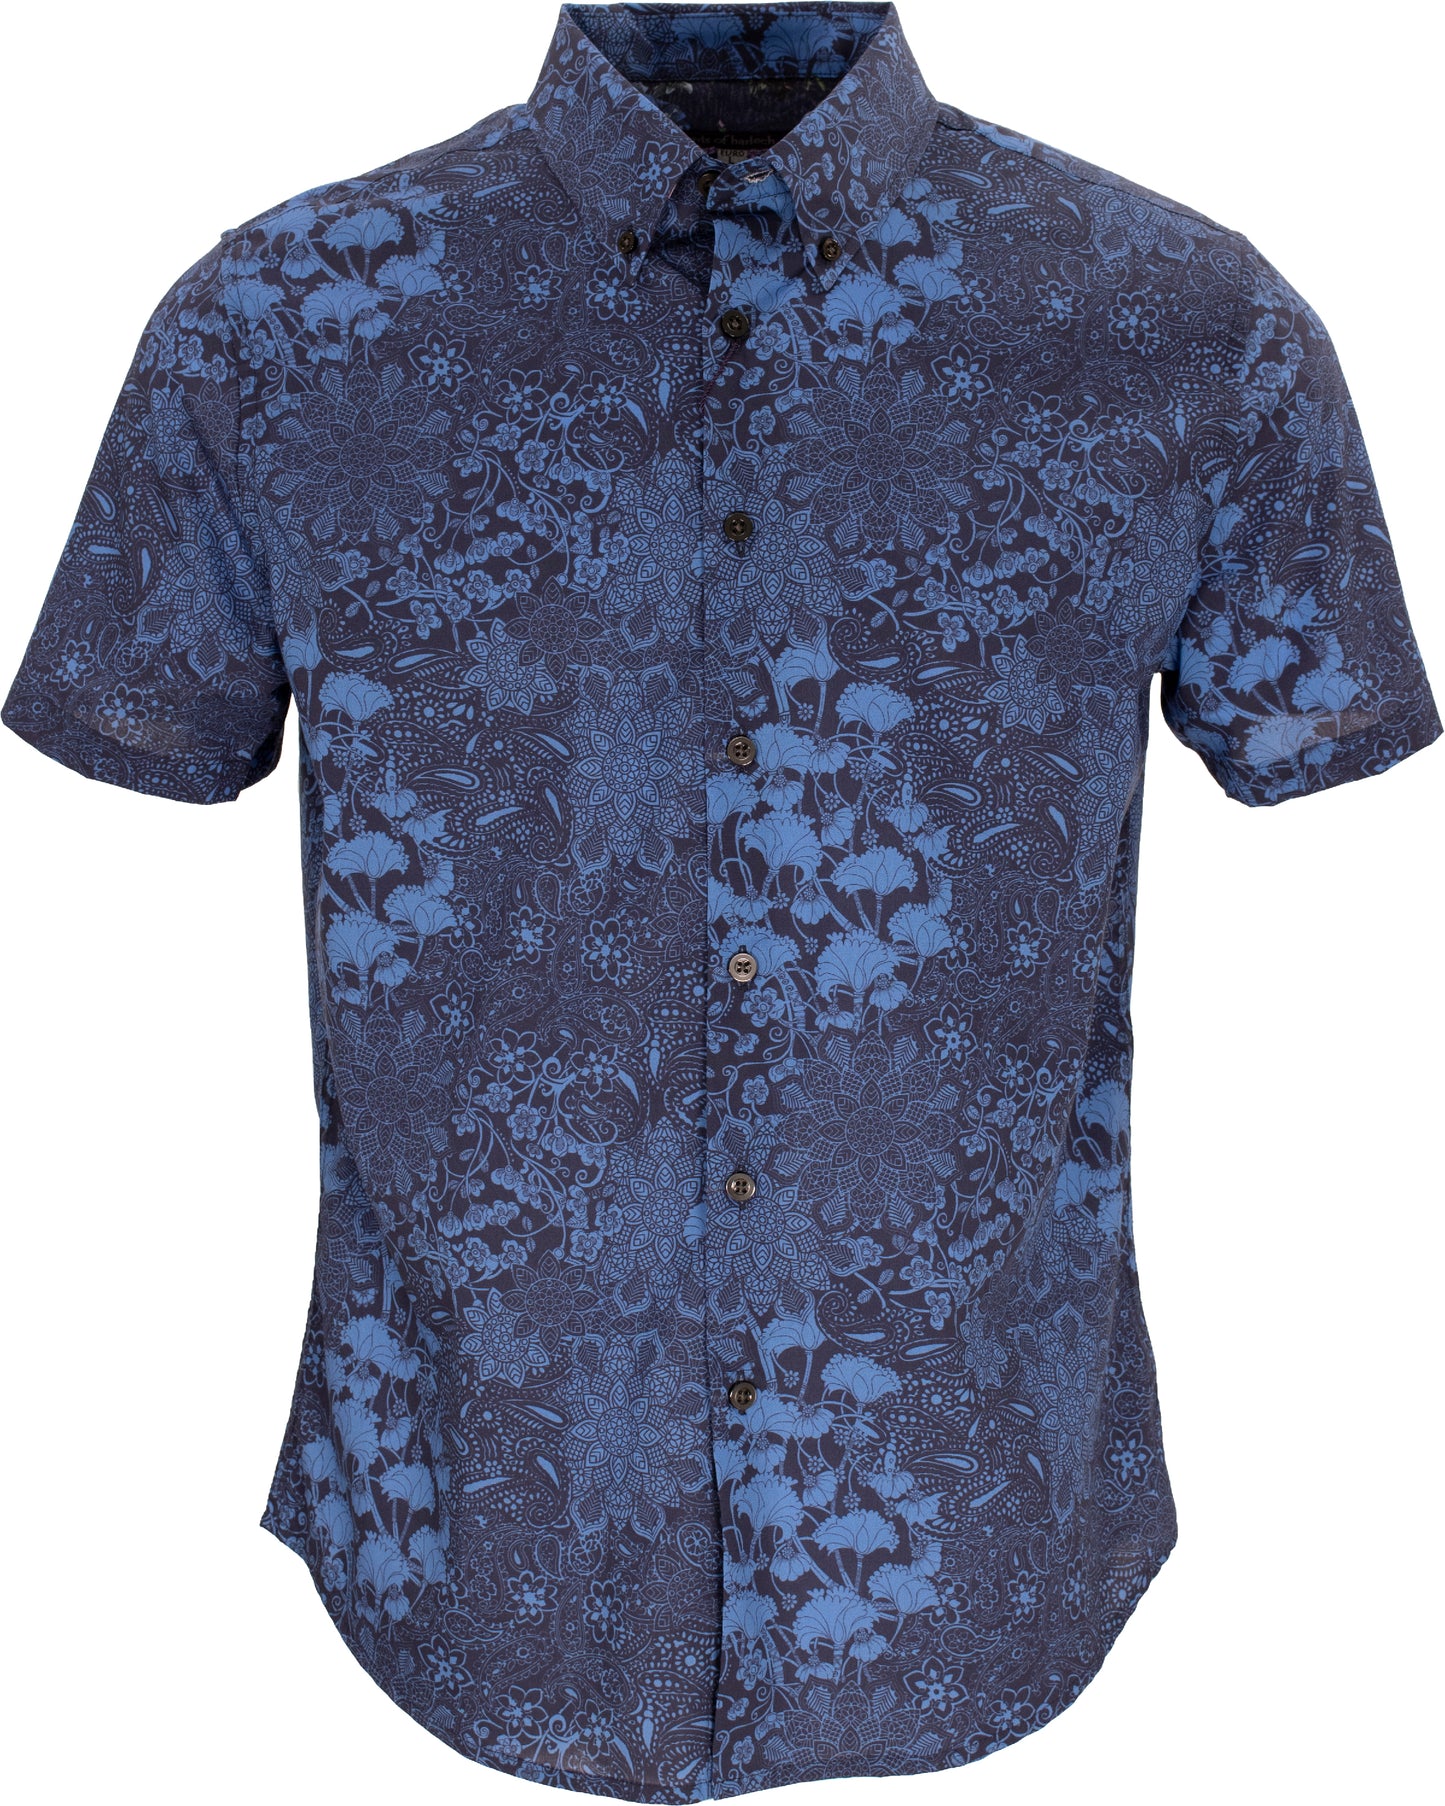 Tim Paisley Floral Navy Shirt